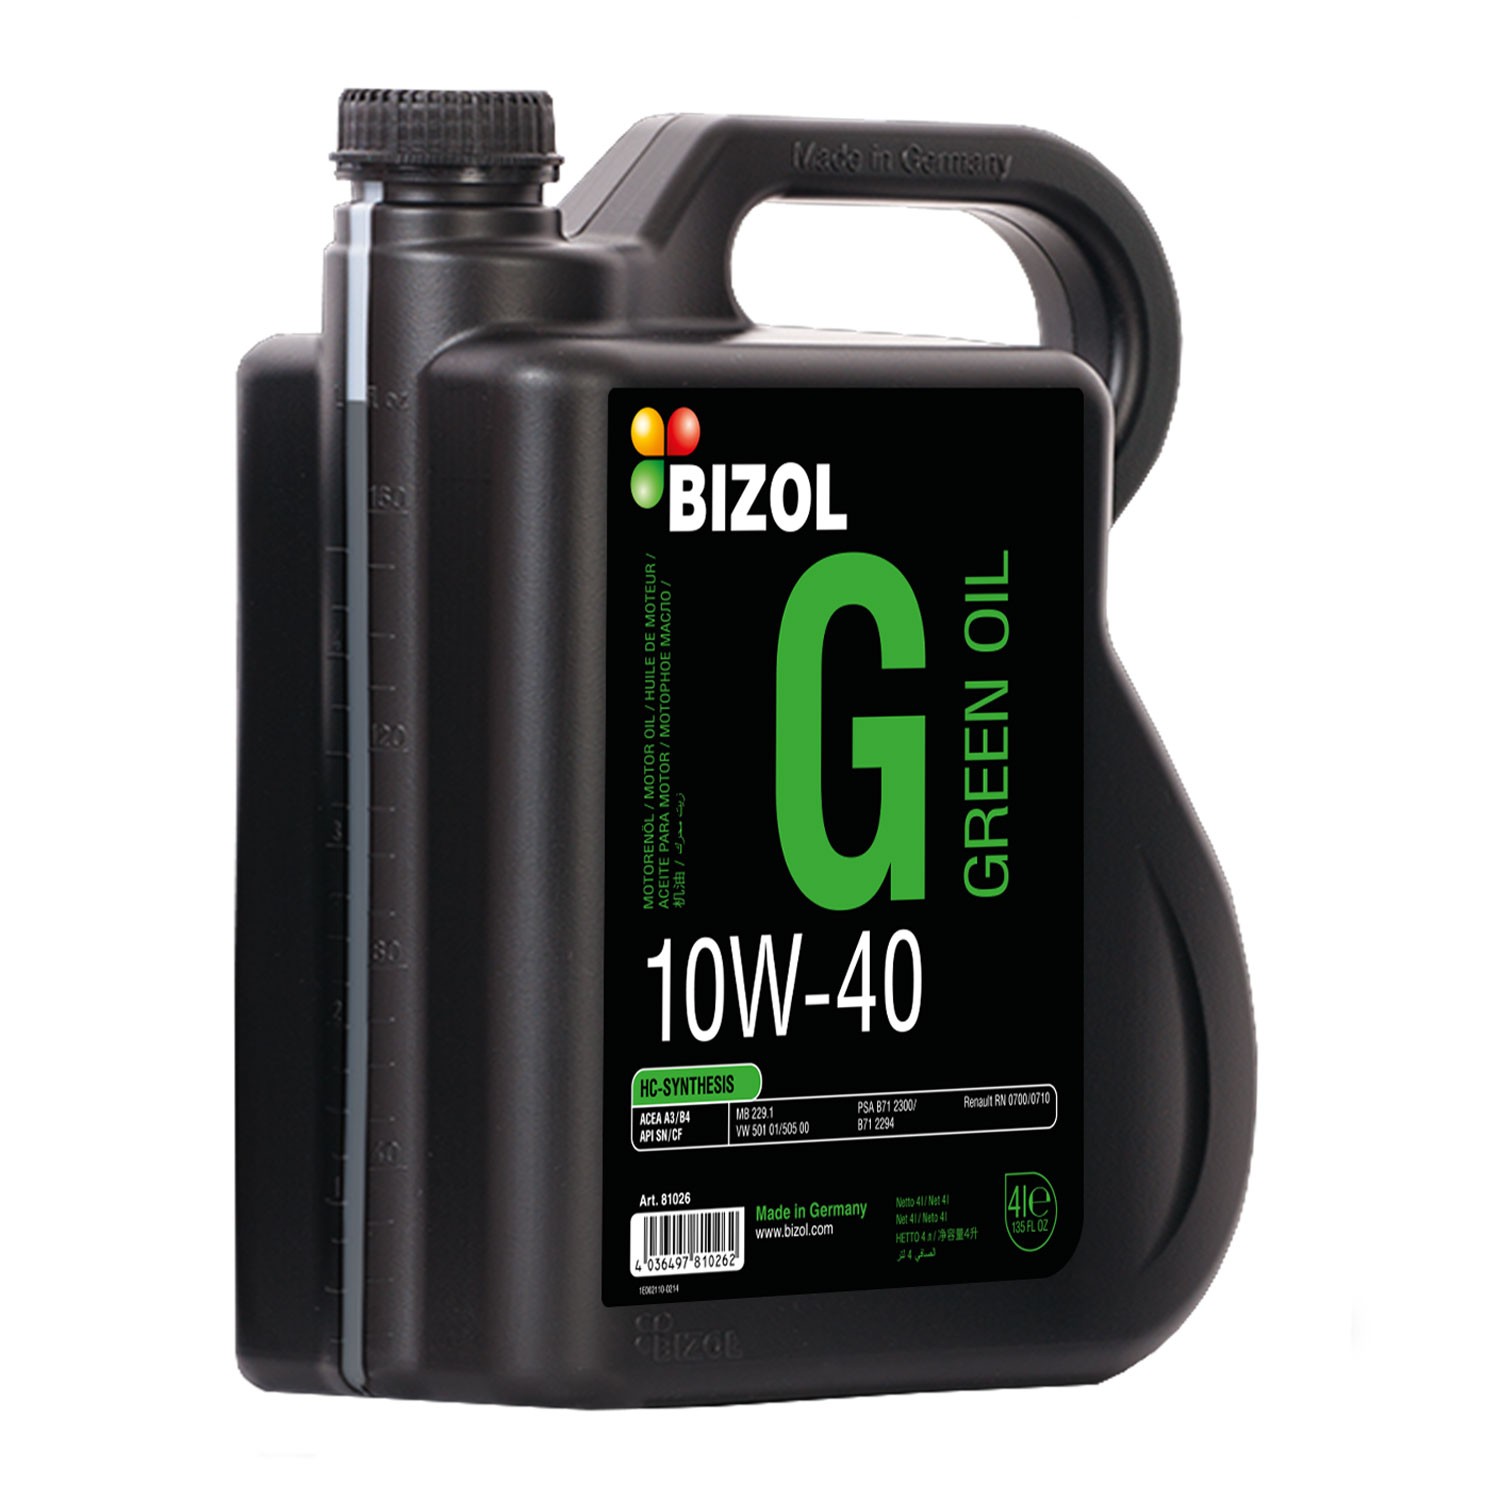 BIZOL Green Oil 10W-40